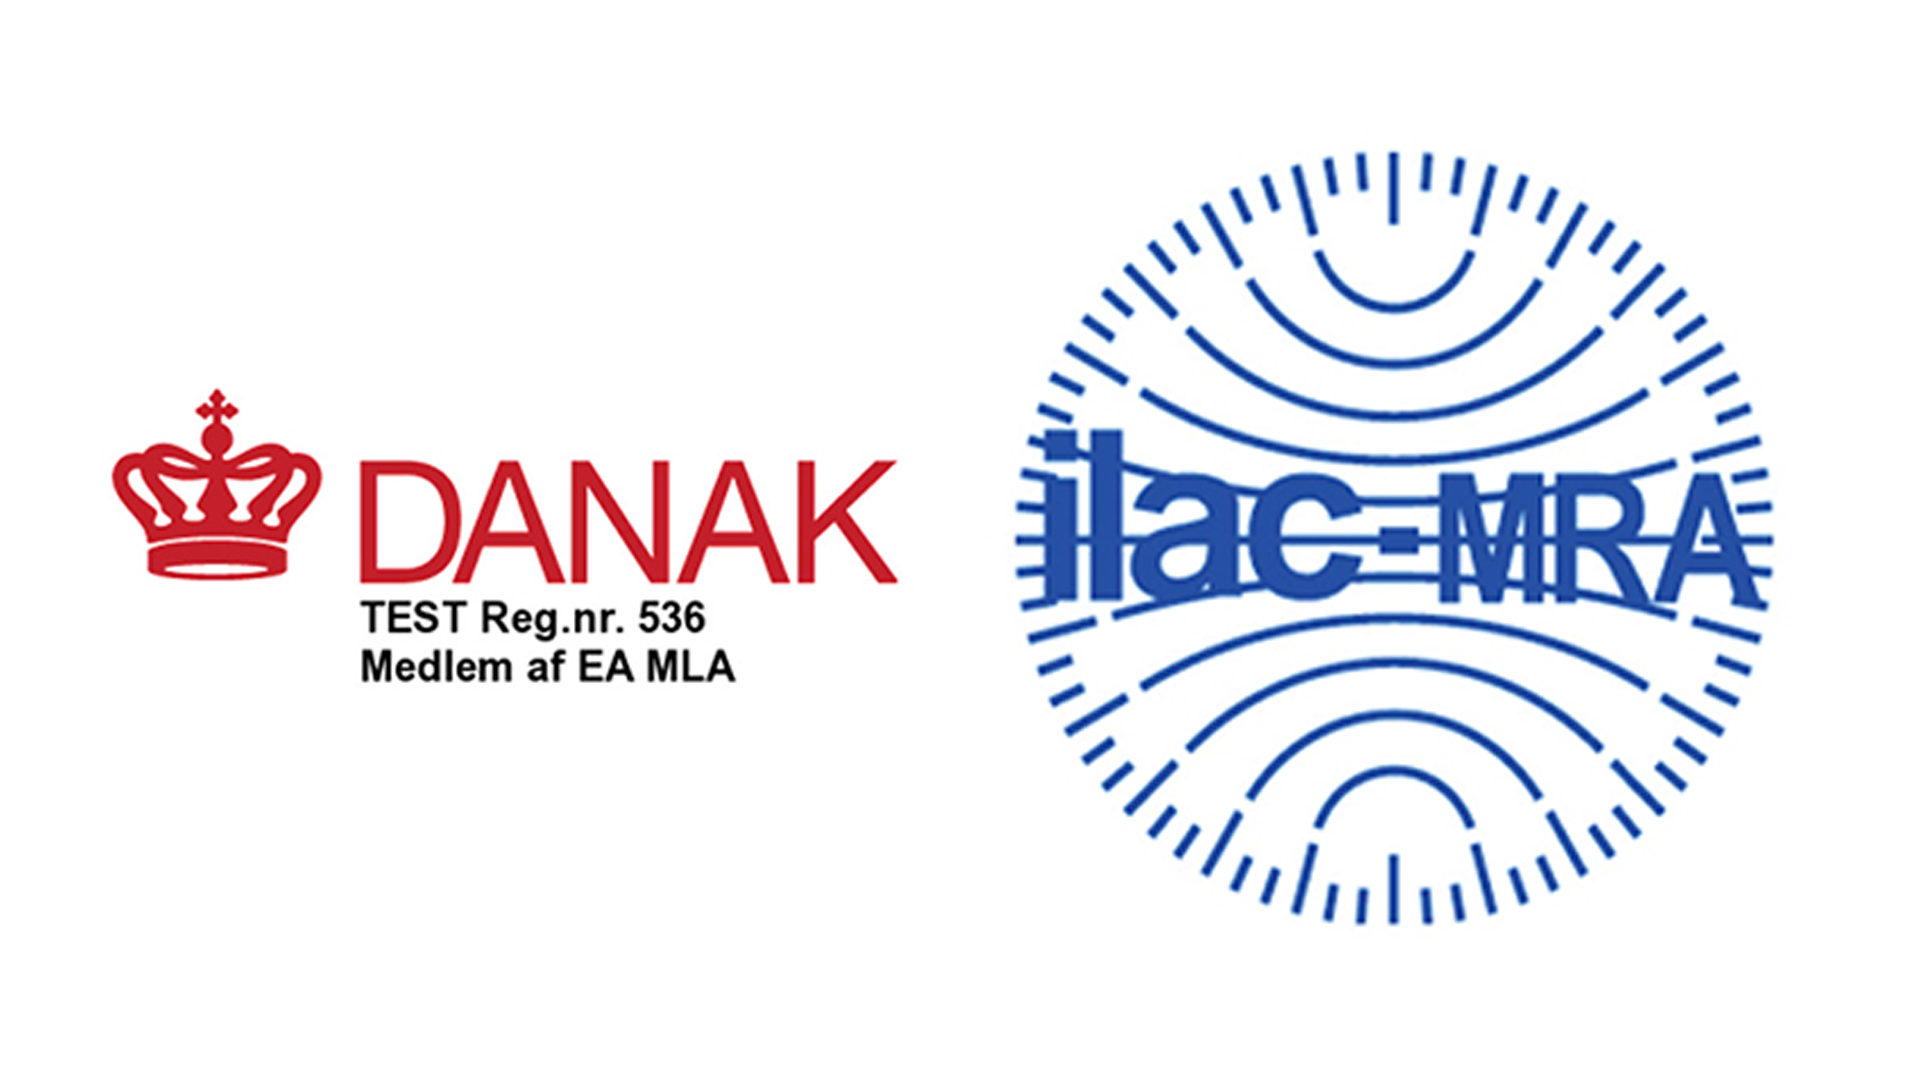 DANAK og ilac MRA logos